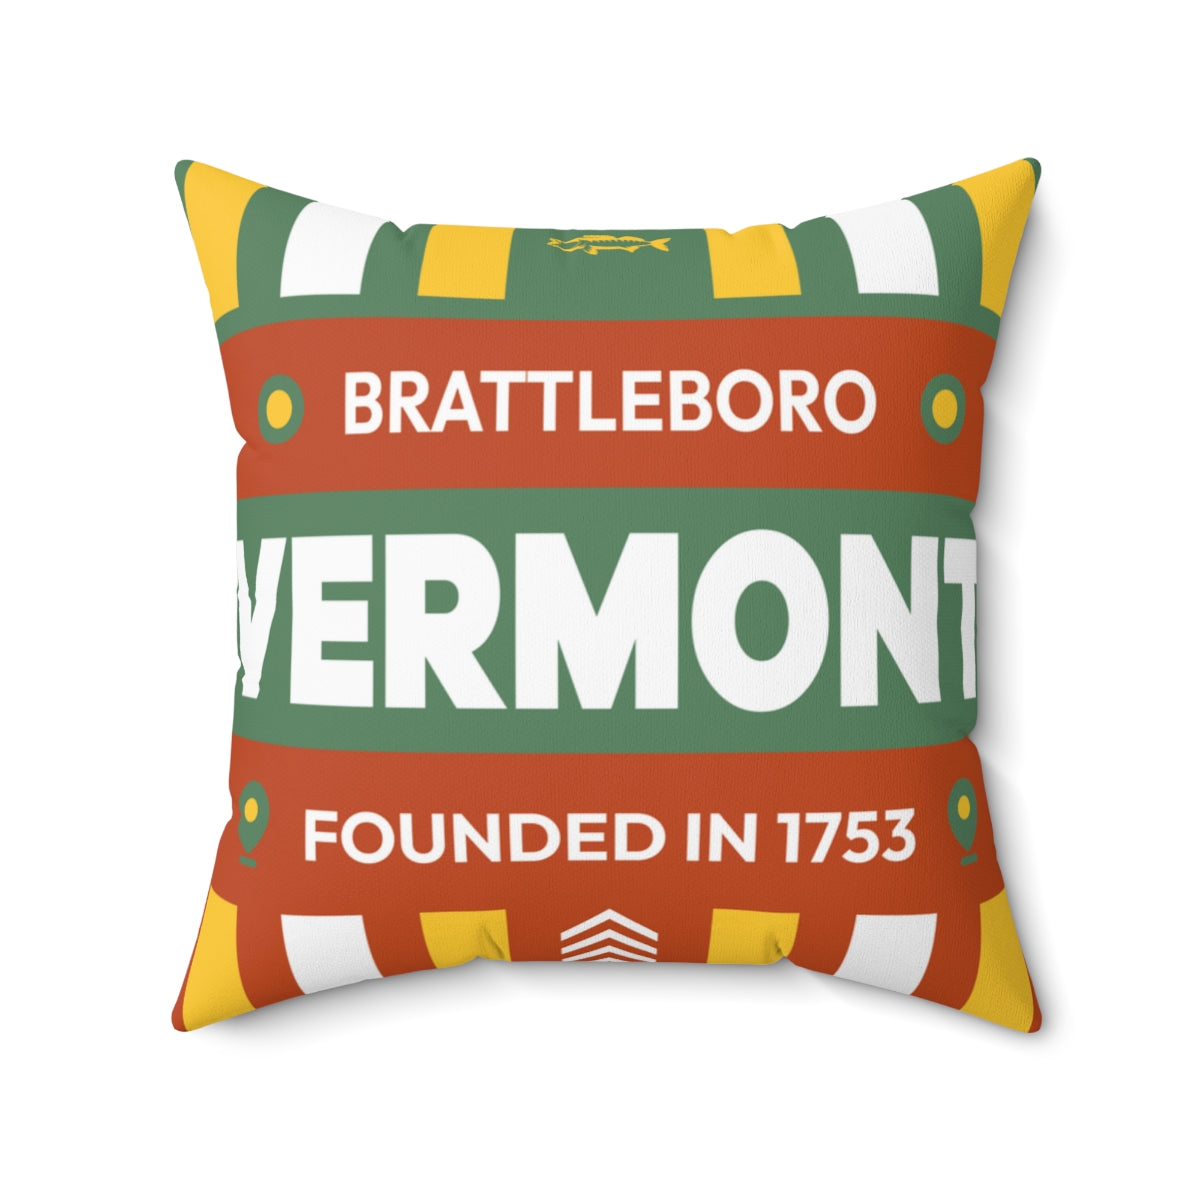 20"x20" pillow design for Brattleboro, Vermont Top view.